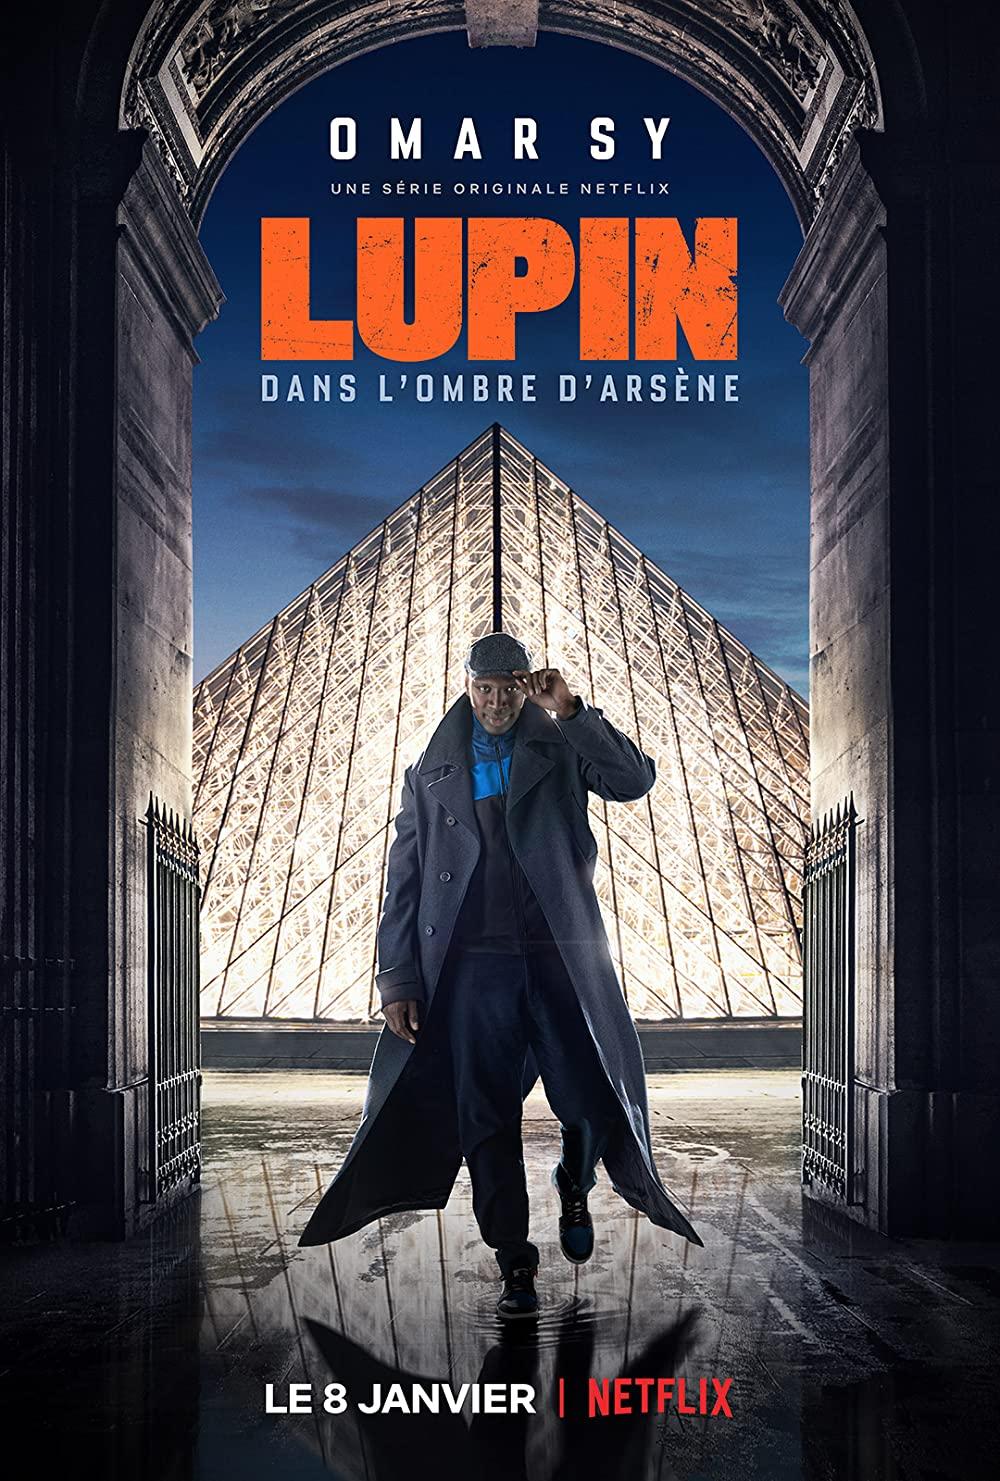 Сериал Люпен/Lupin онлайн